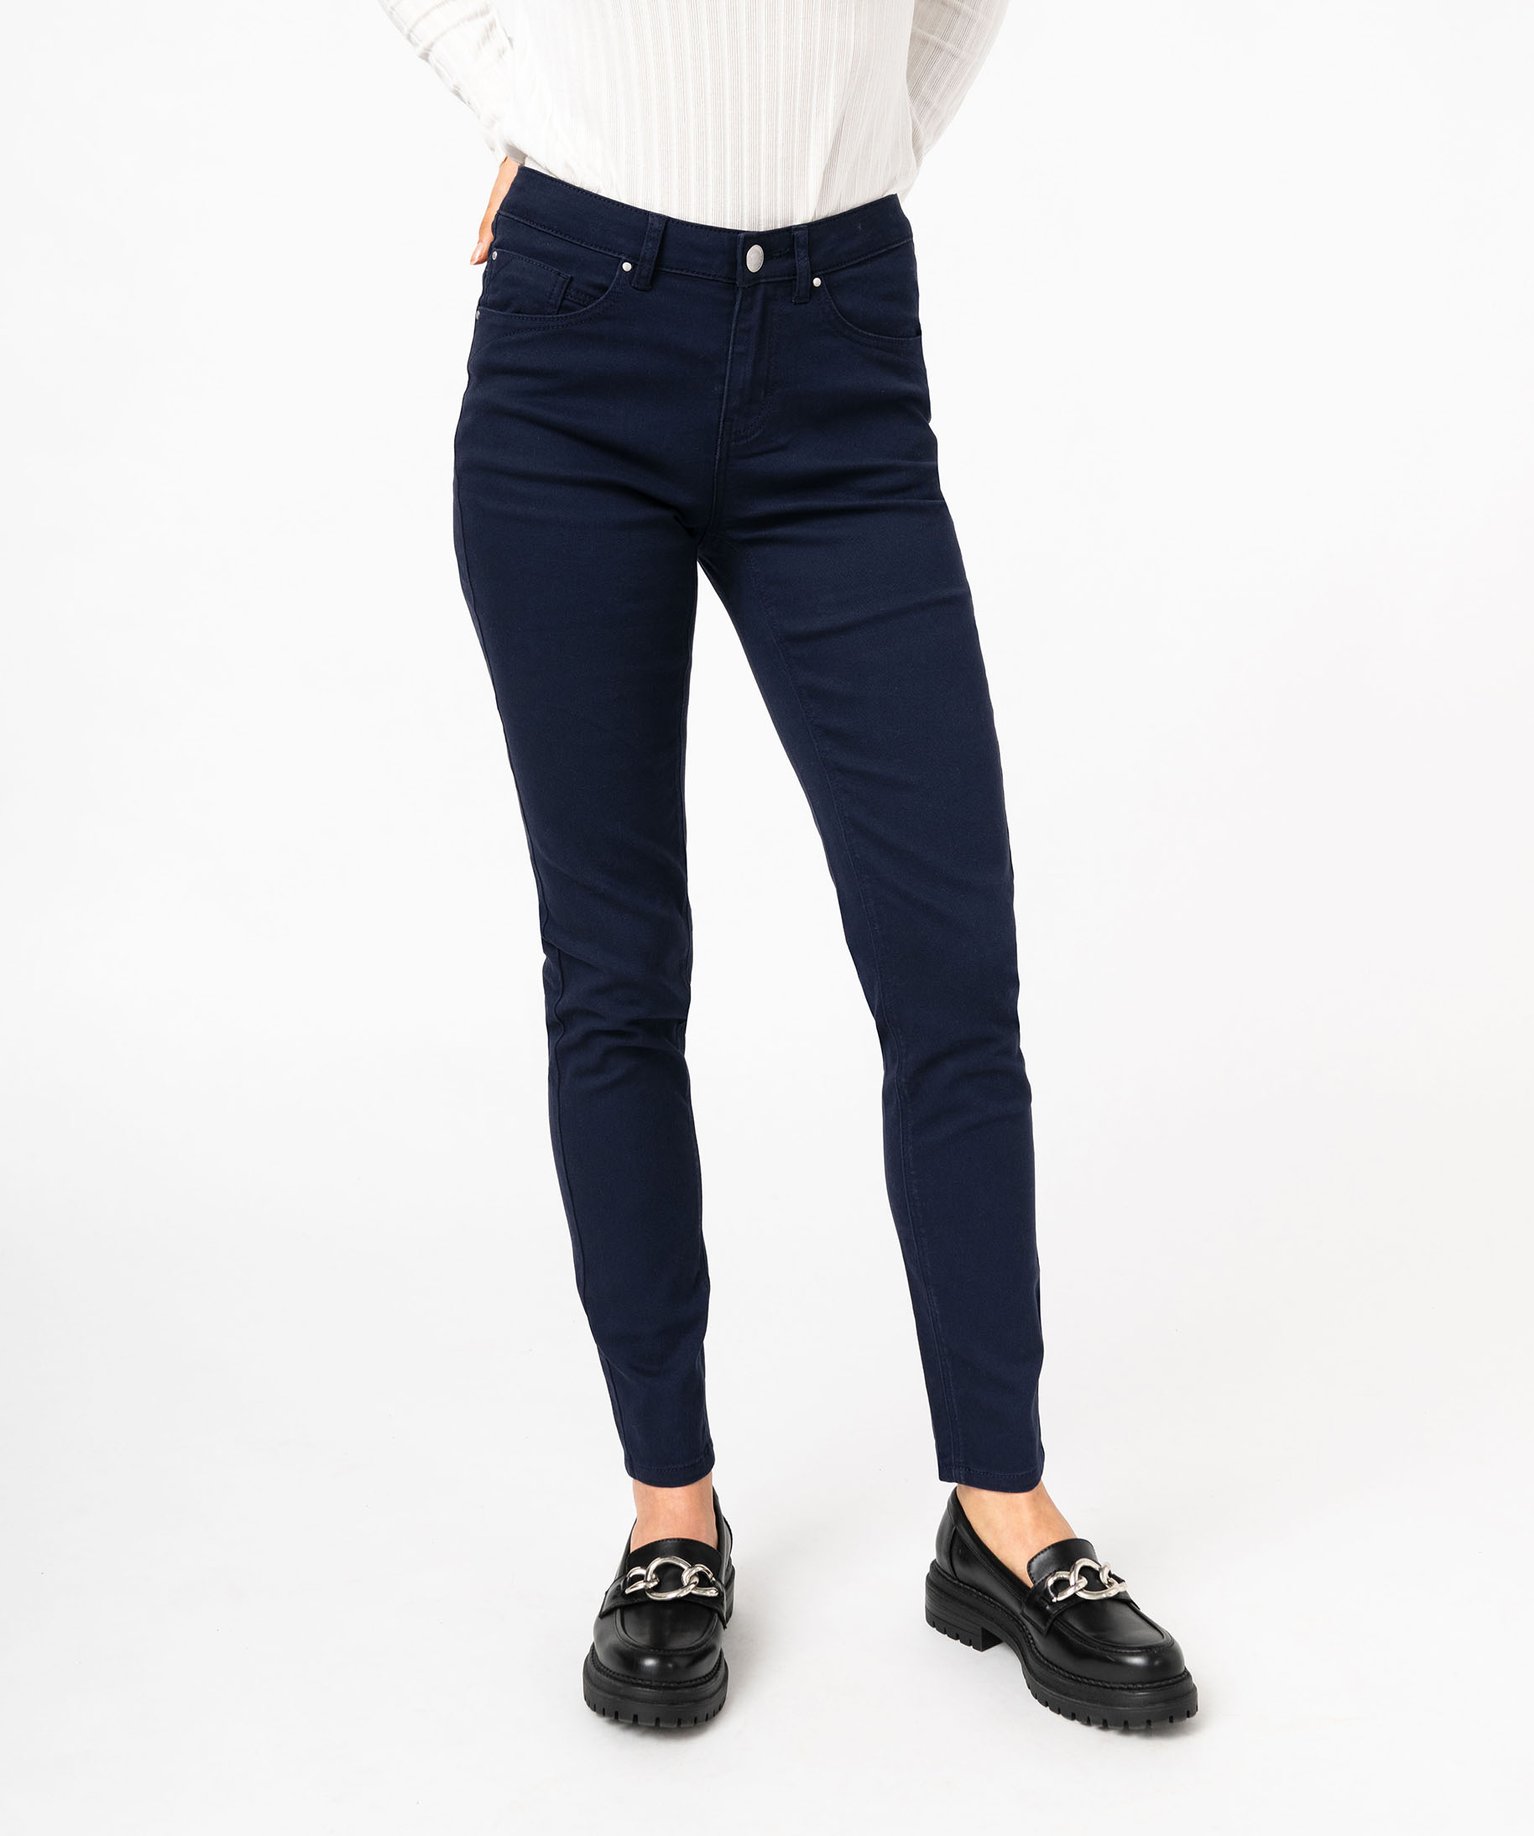 pantalon coupe slim taille normale femme bleu pantalons